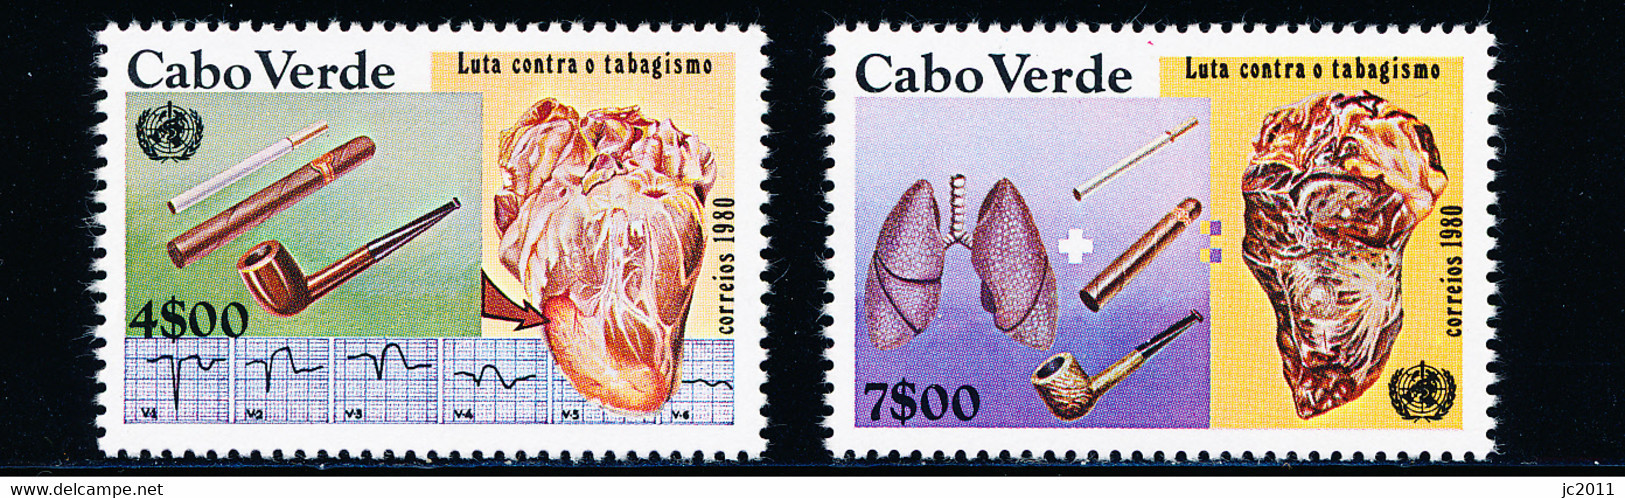 Cabo Verde - 1980 - Smoking / Fight Against - World Health Day - MNH - Kap Verde